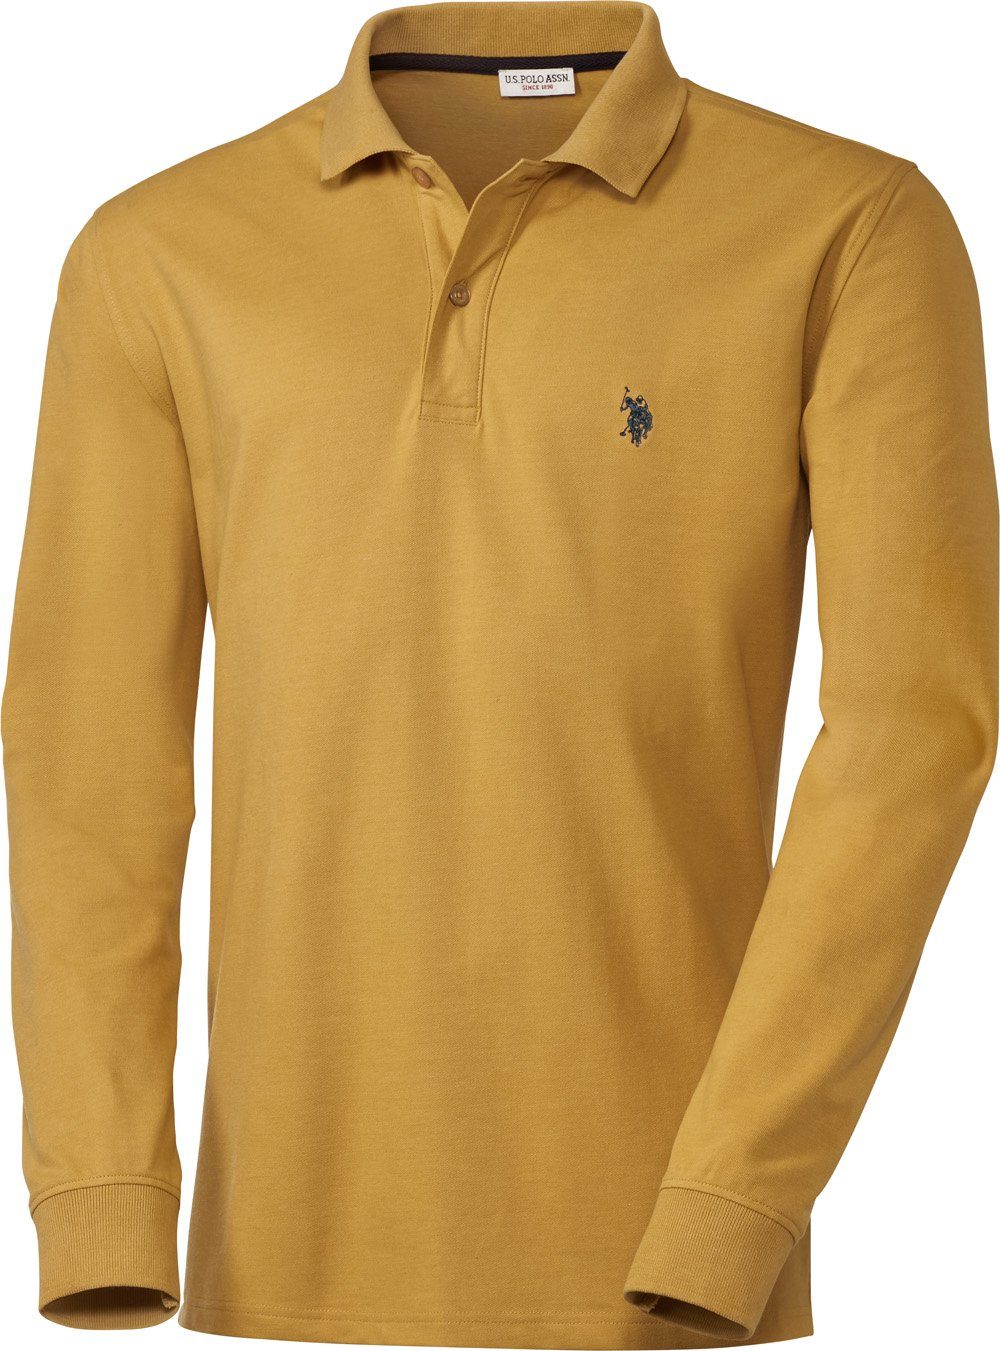 U.S. Polo Assn Langarm-Poloshirt angenehmes Stretch-Baumwoll-Piqué Langarmshirt gelb